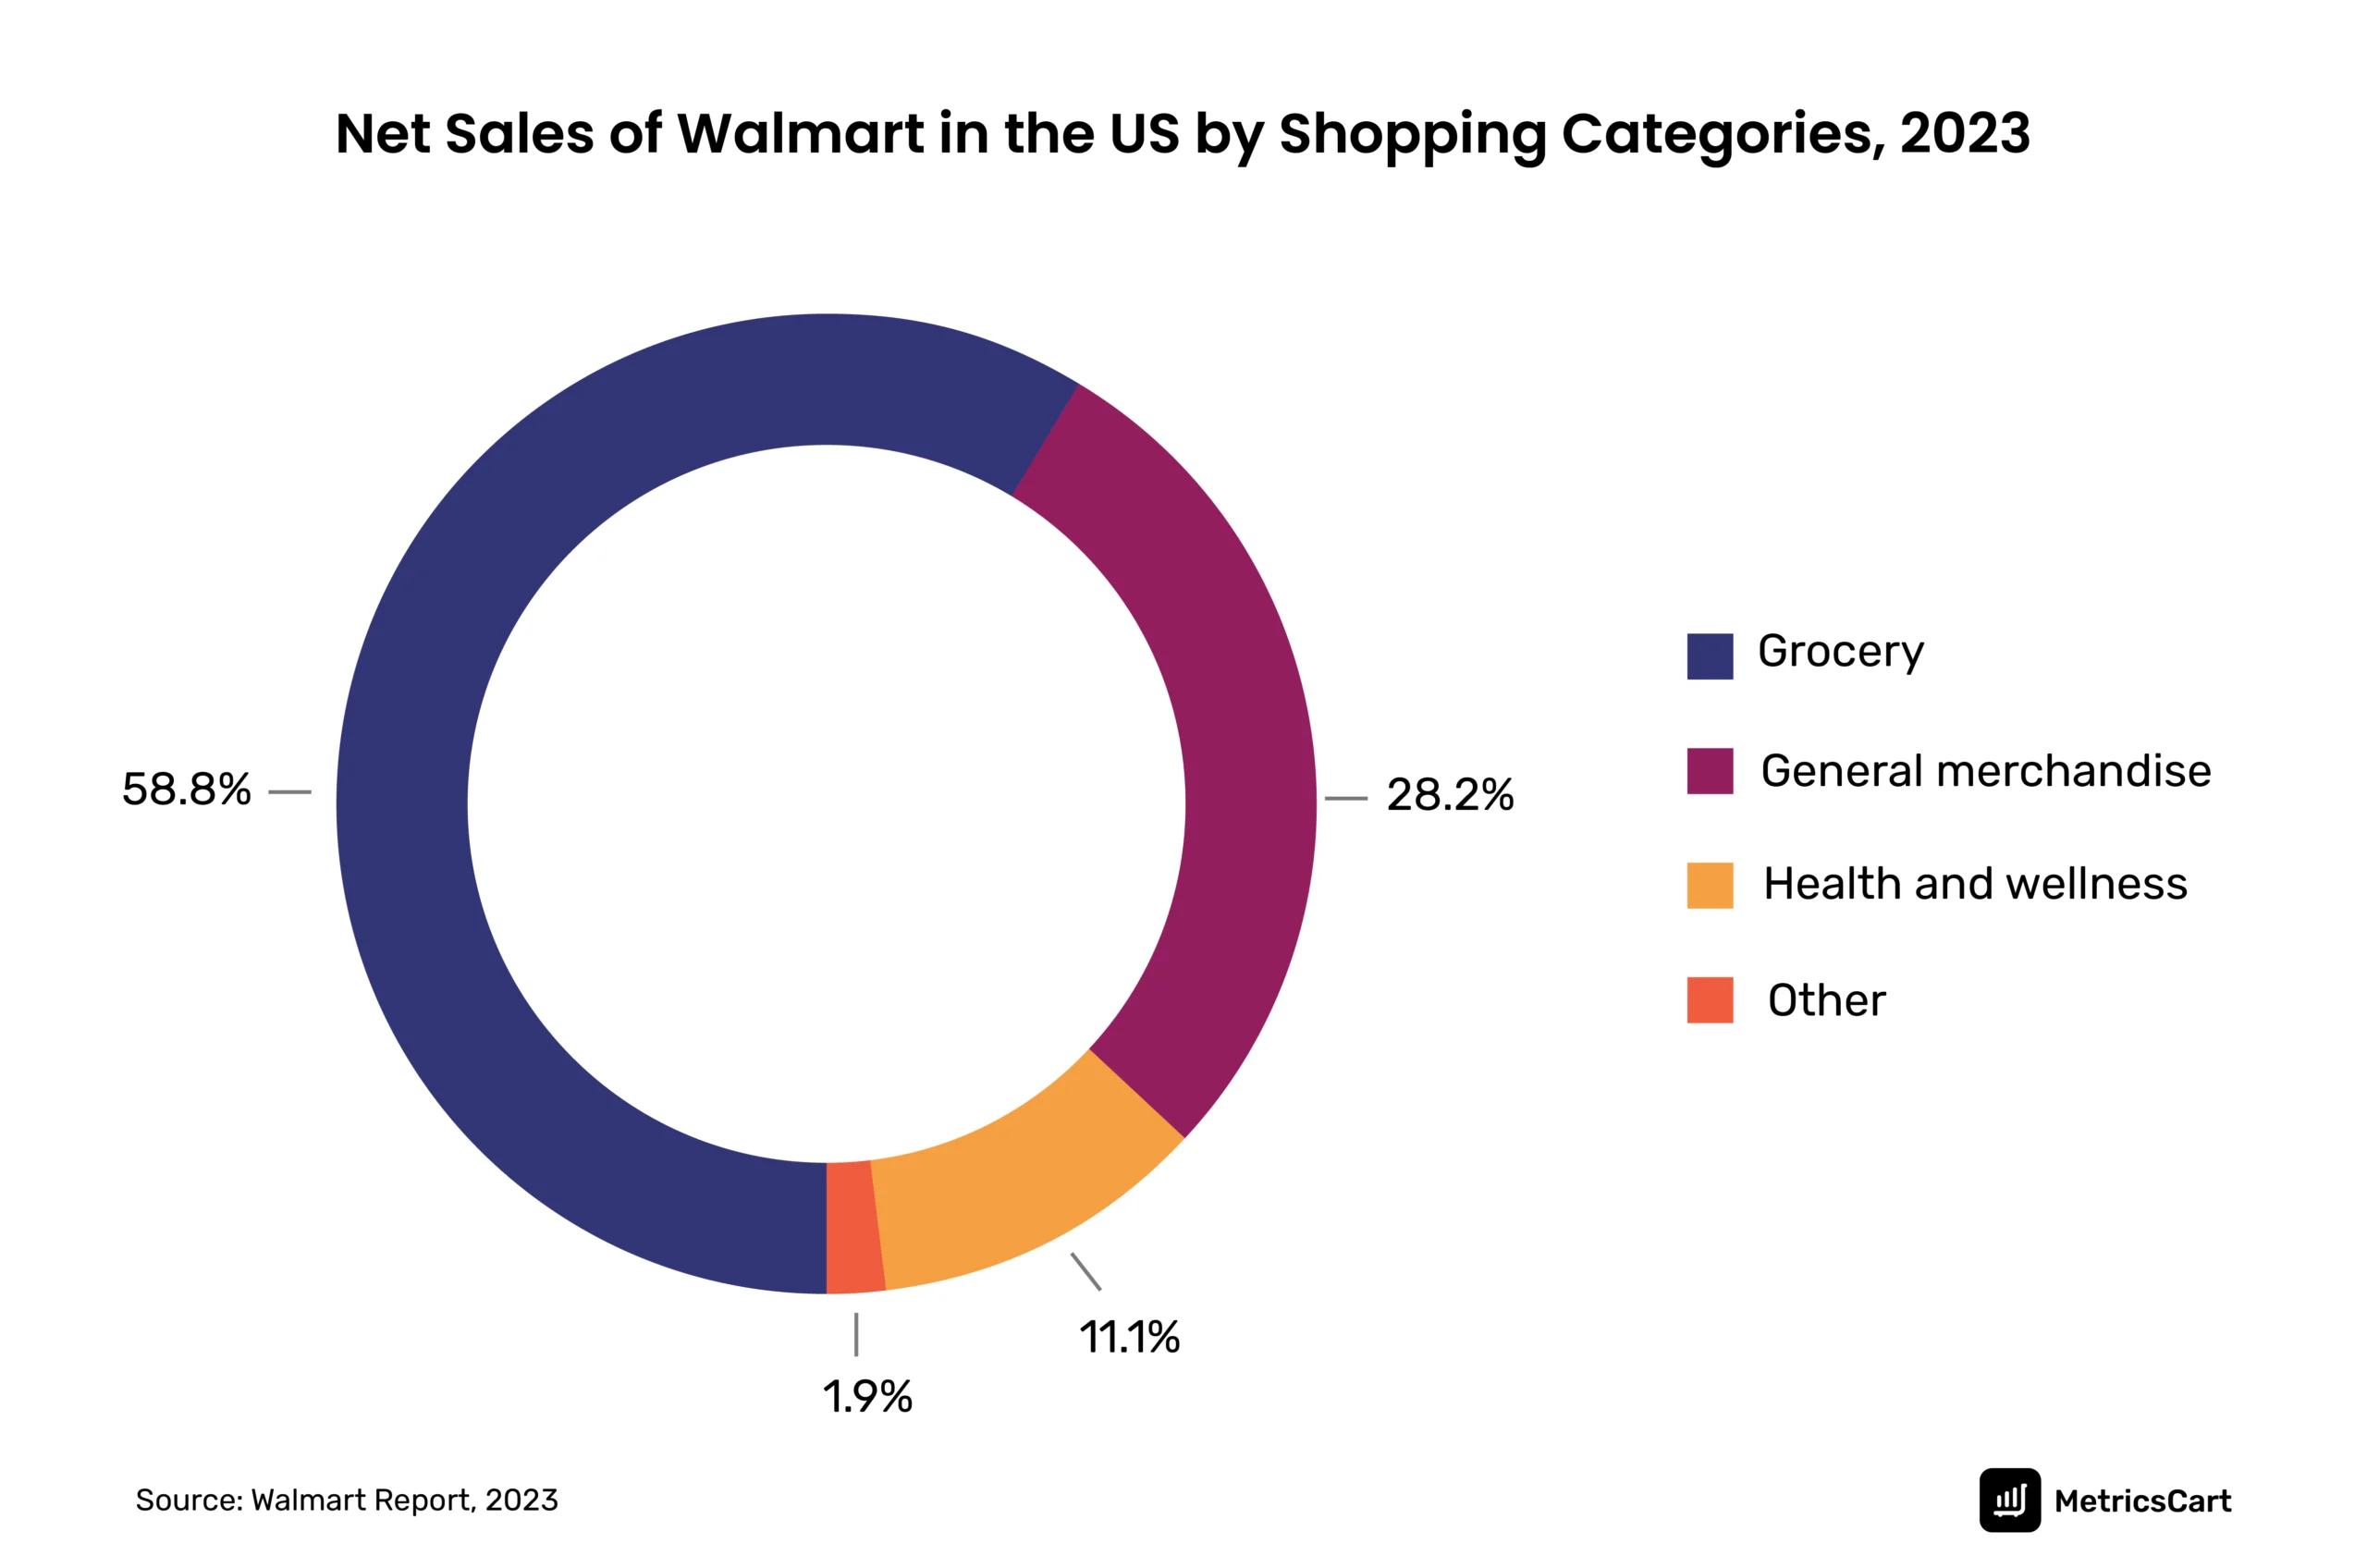 A pie chart explaining the net sales percentage of different merchandise units of Walmart.